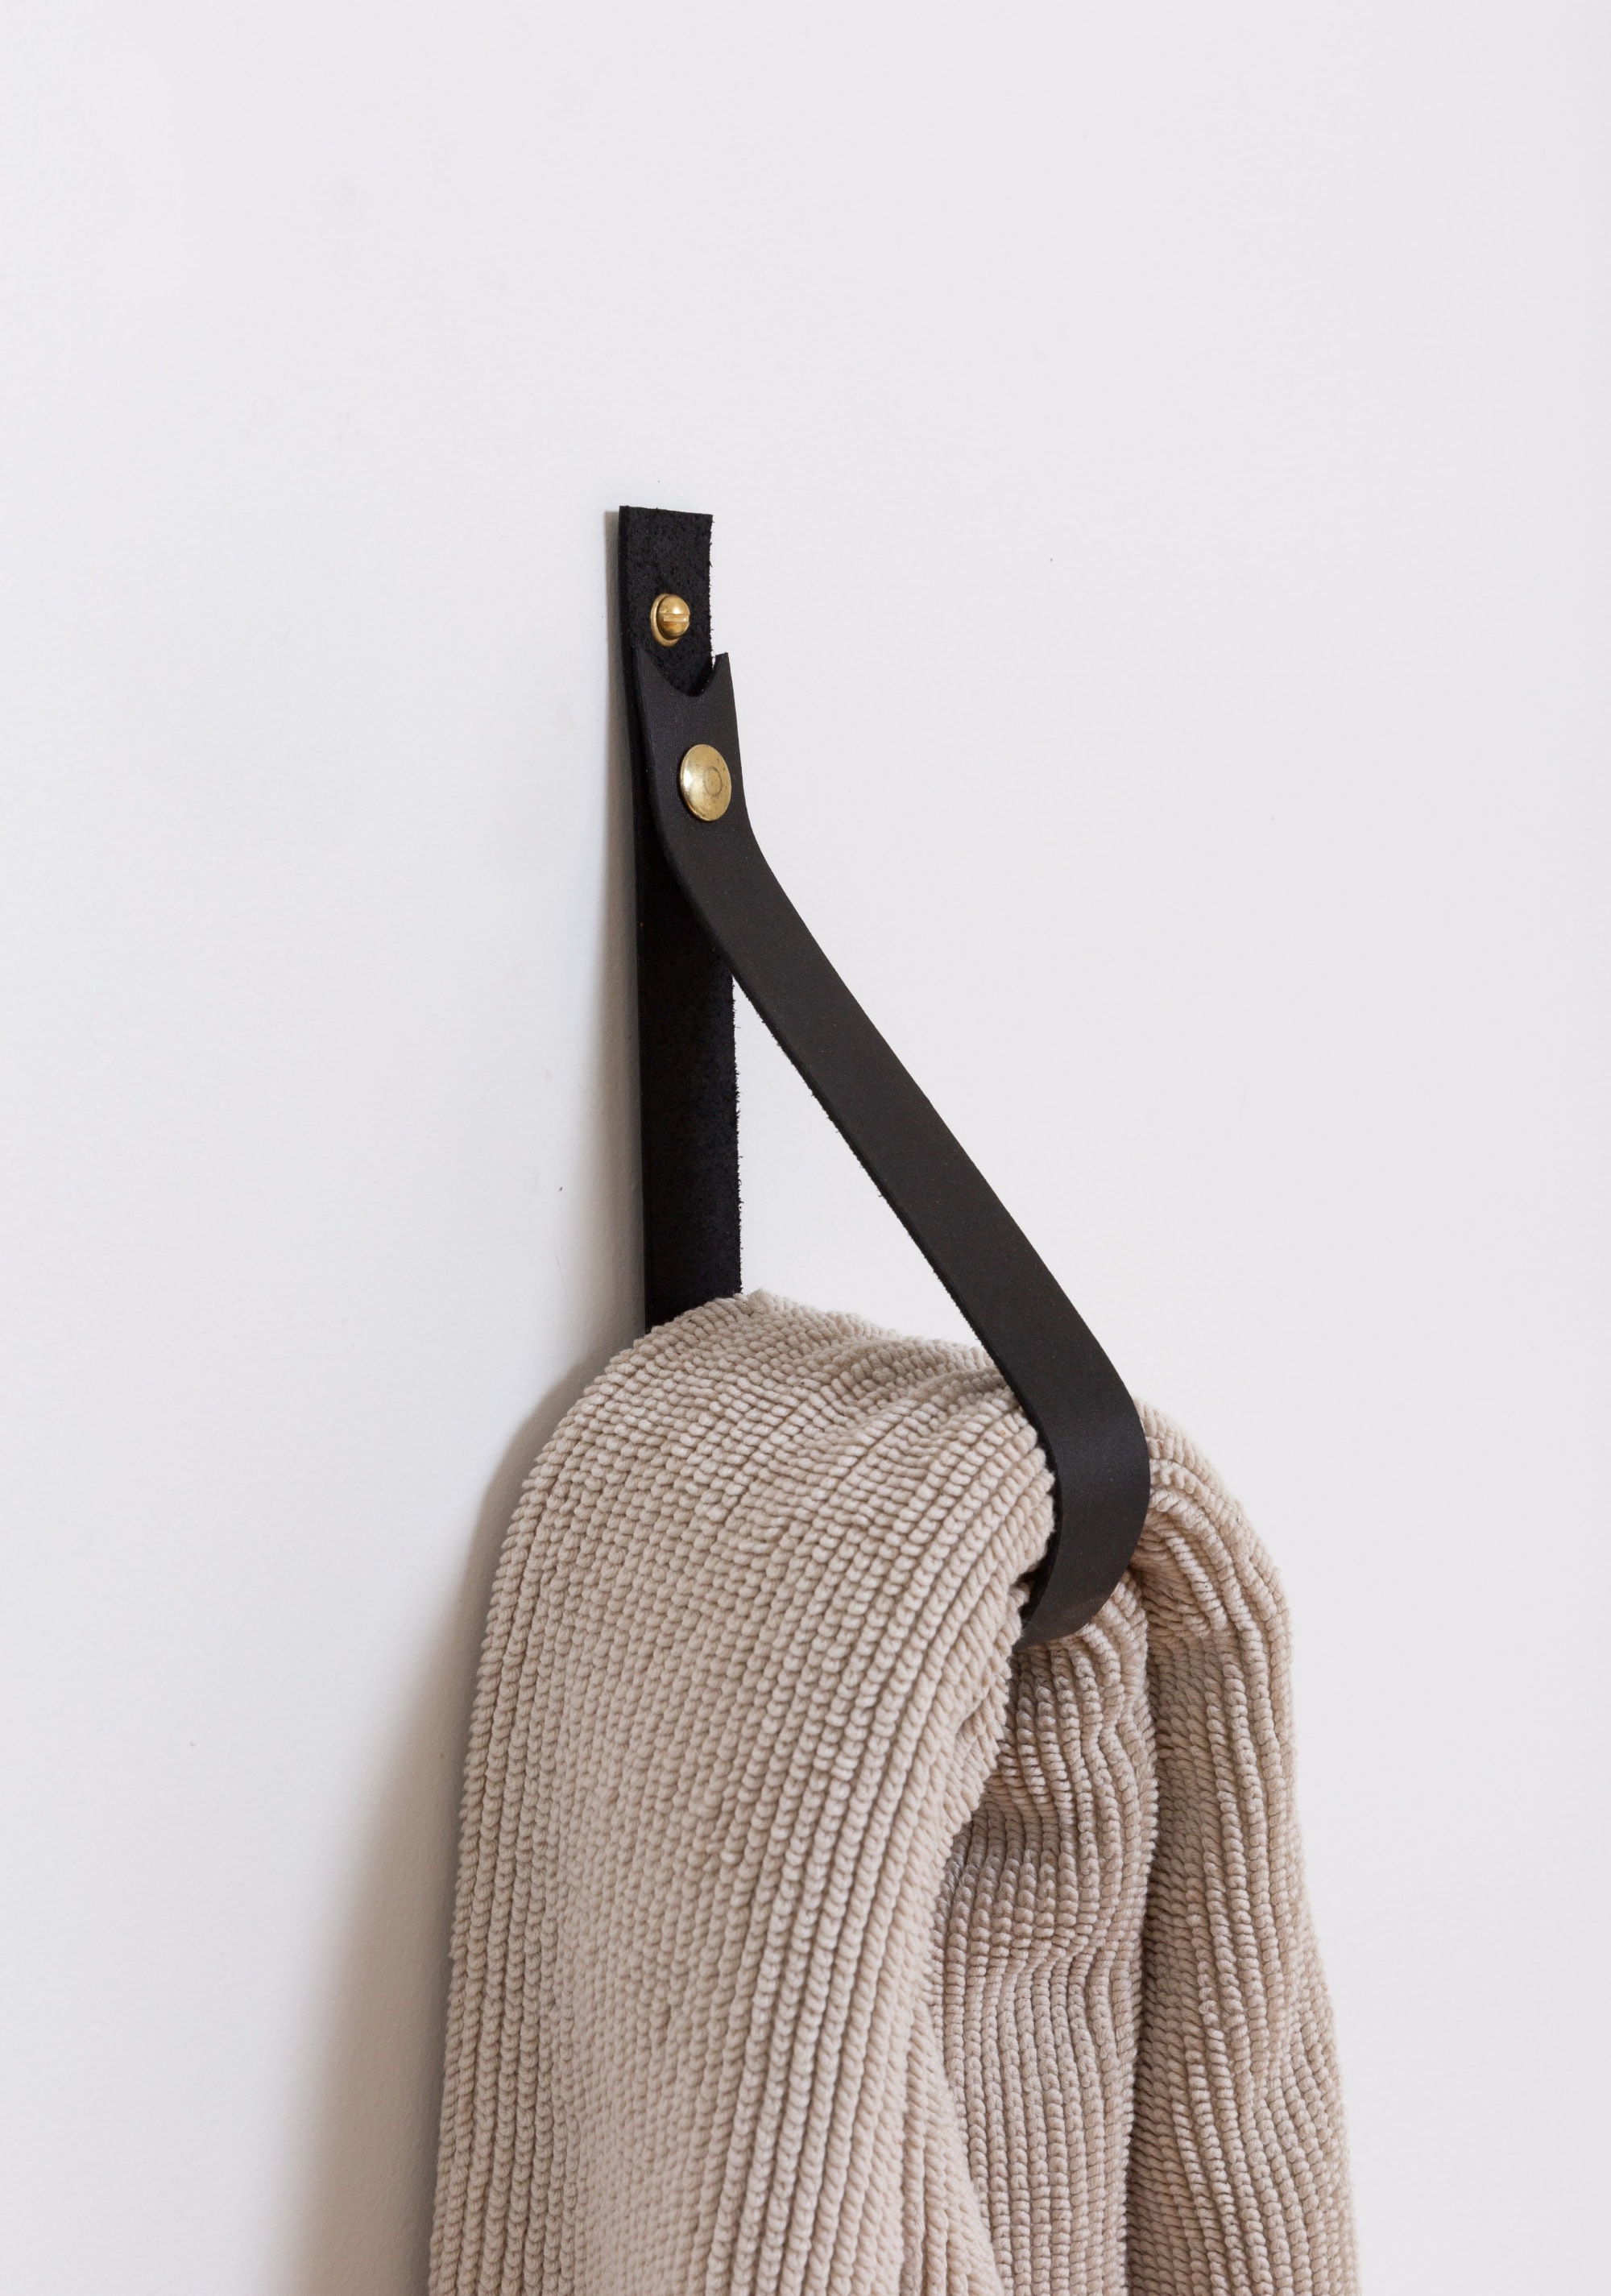 KEYAIIRA - Small Leather Wall Hook, wall hanging strap towel hook